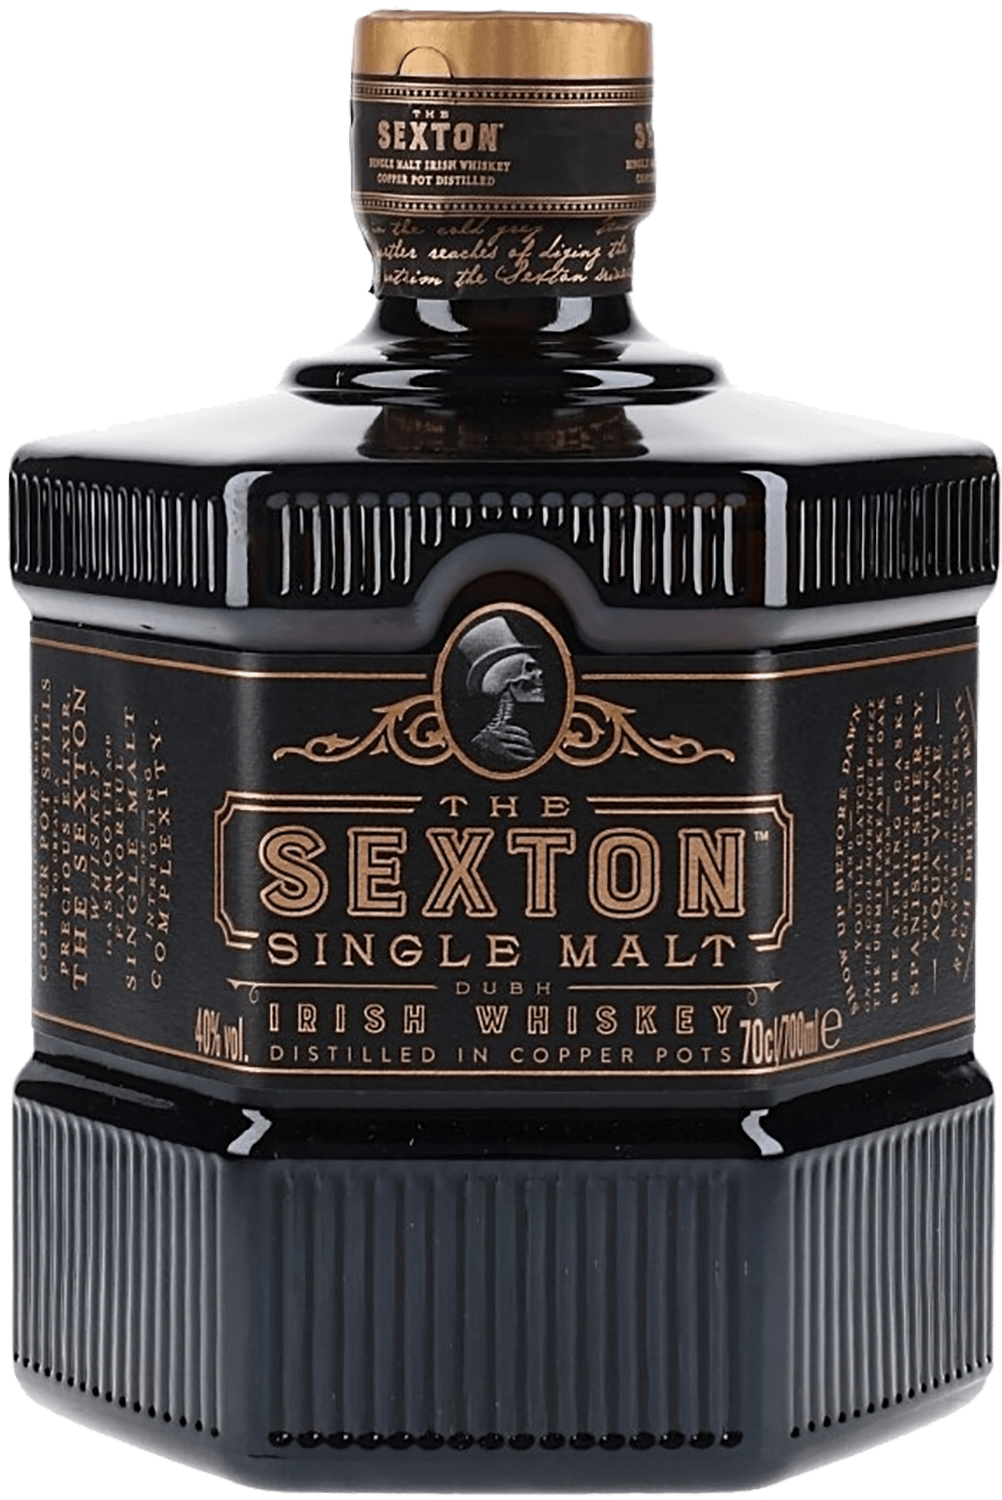 The Sexton Single Malt Irish Whiskey pogues single malt irish whiskey gift box